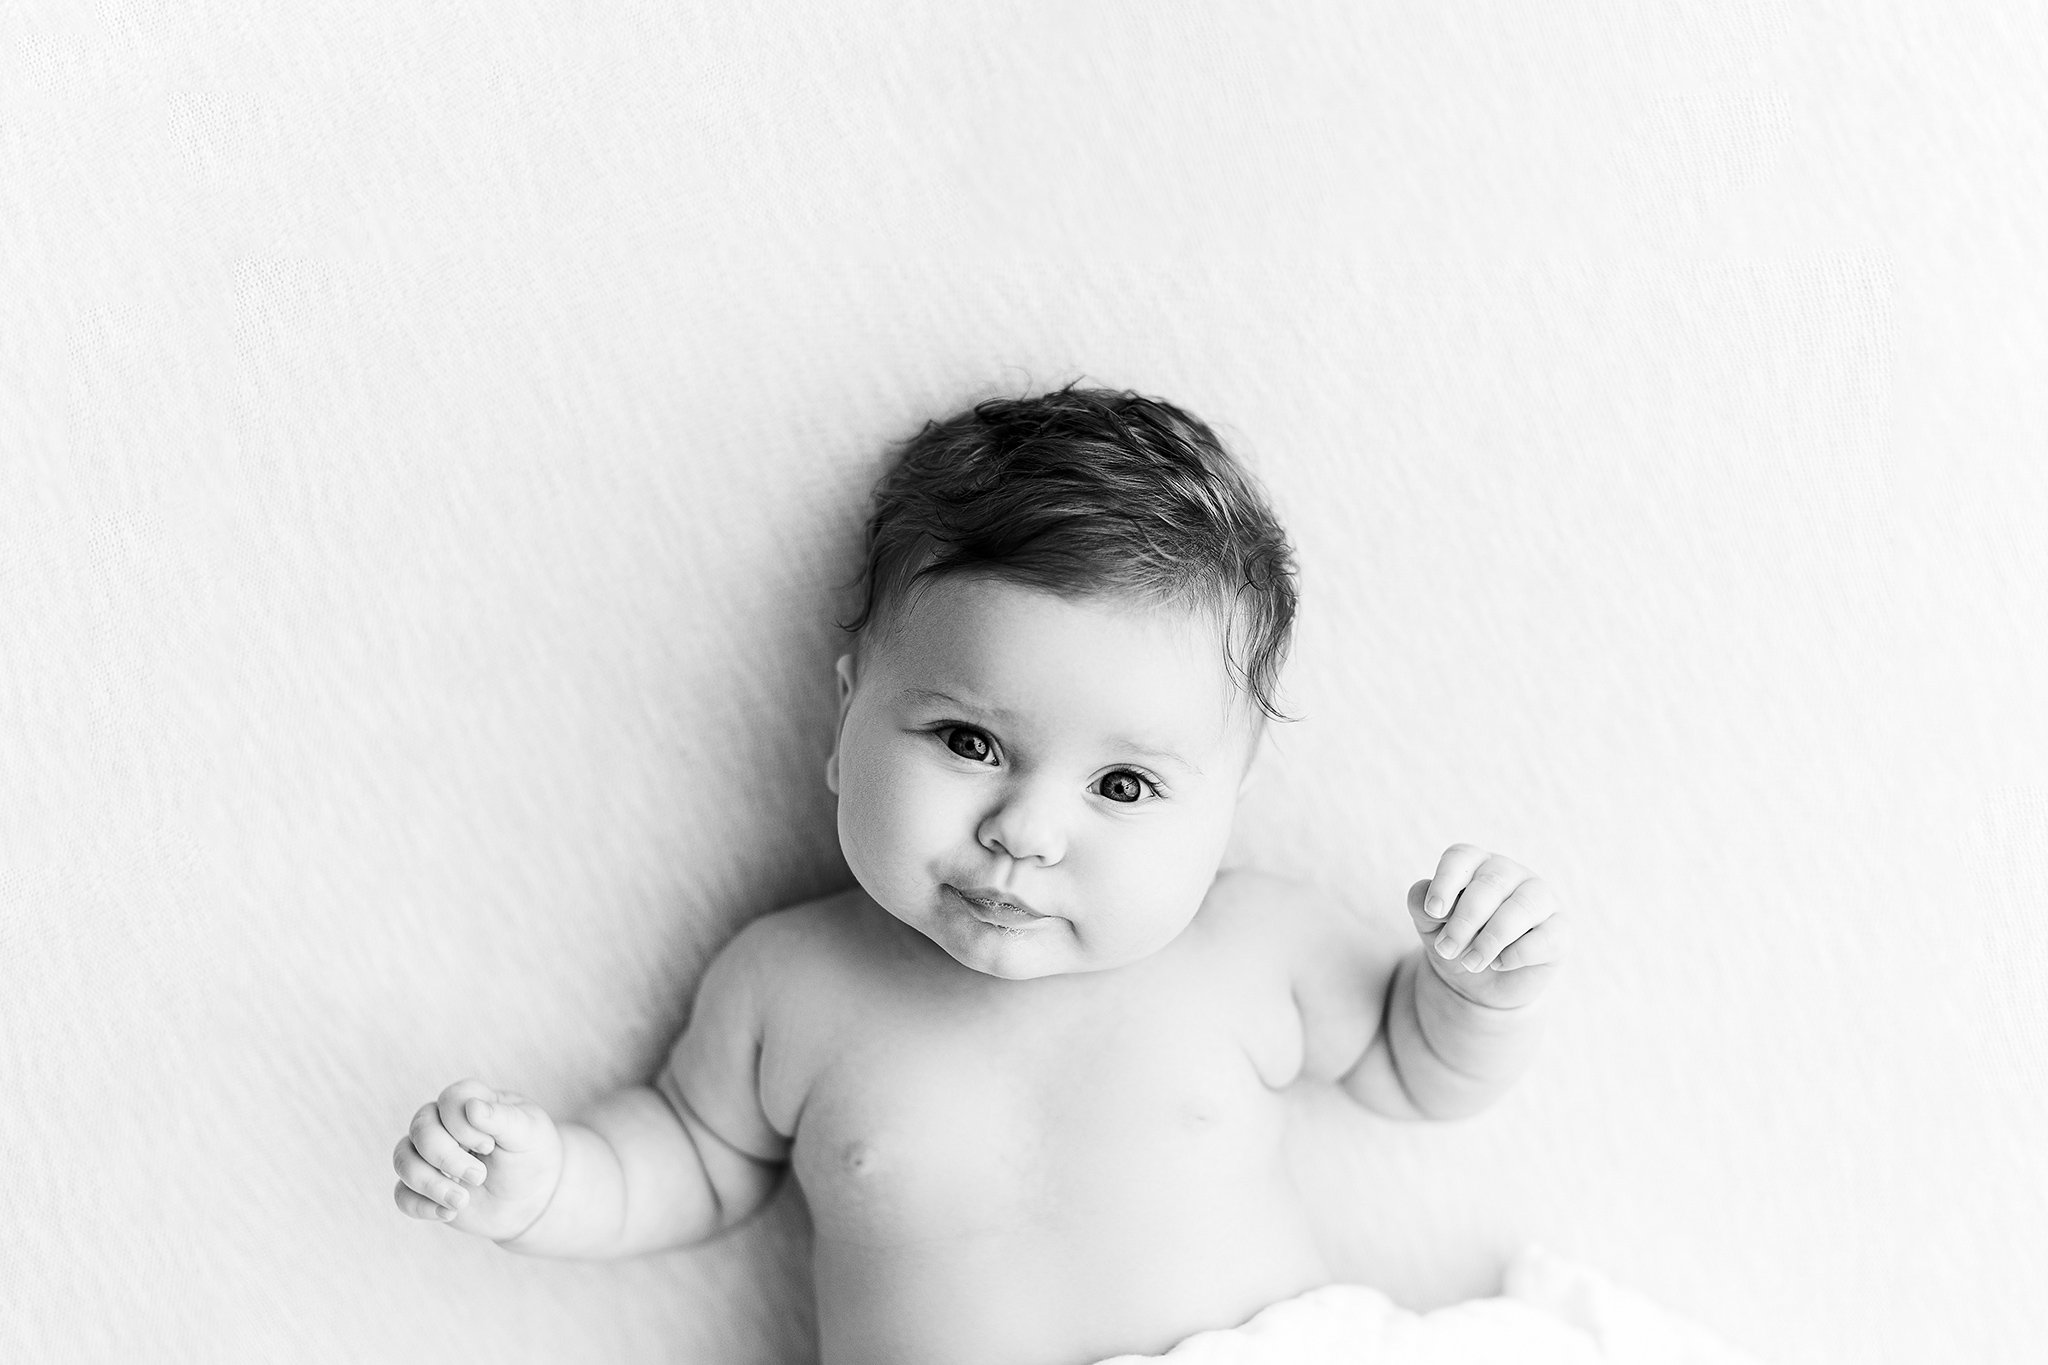 Muskegon MI Newborn Photography, Newborn Photographer Near Me, Baby Photographer Muskegon MI, Maternity Photography Muskegon MI, Best family photographer Muskegon MI